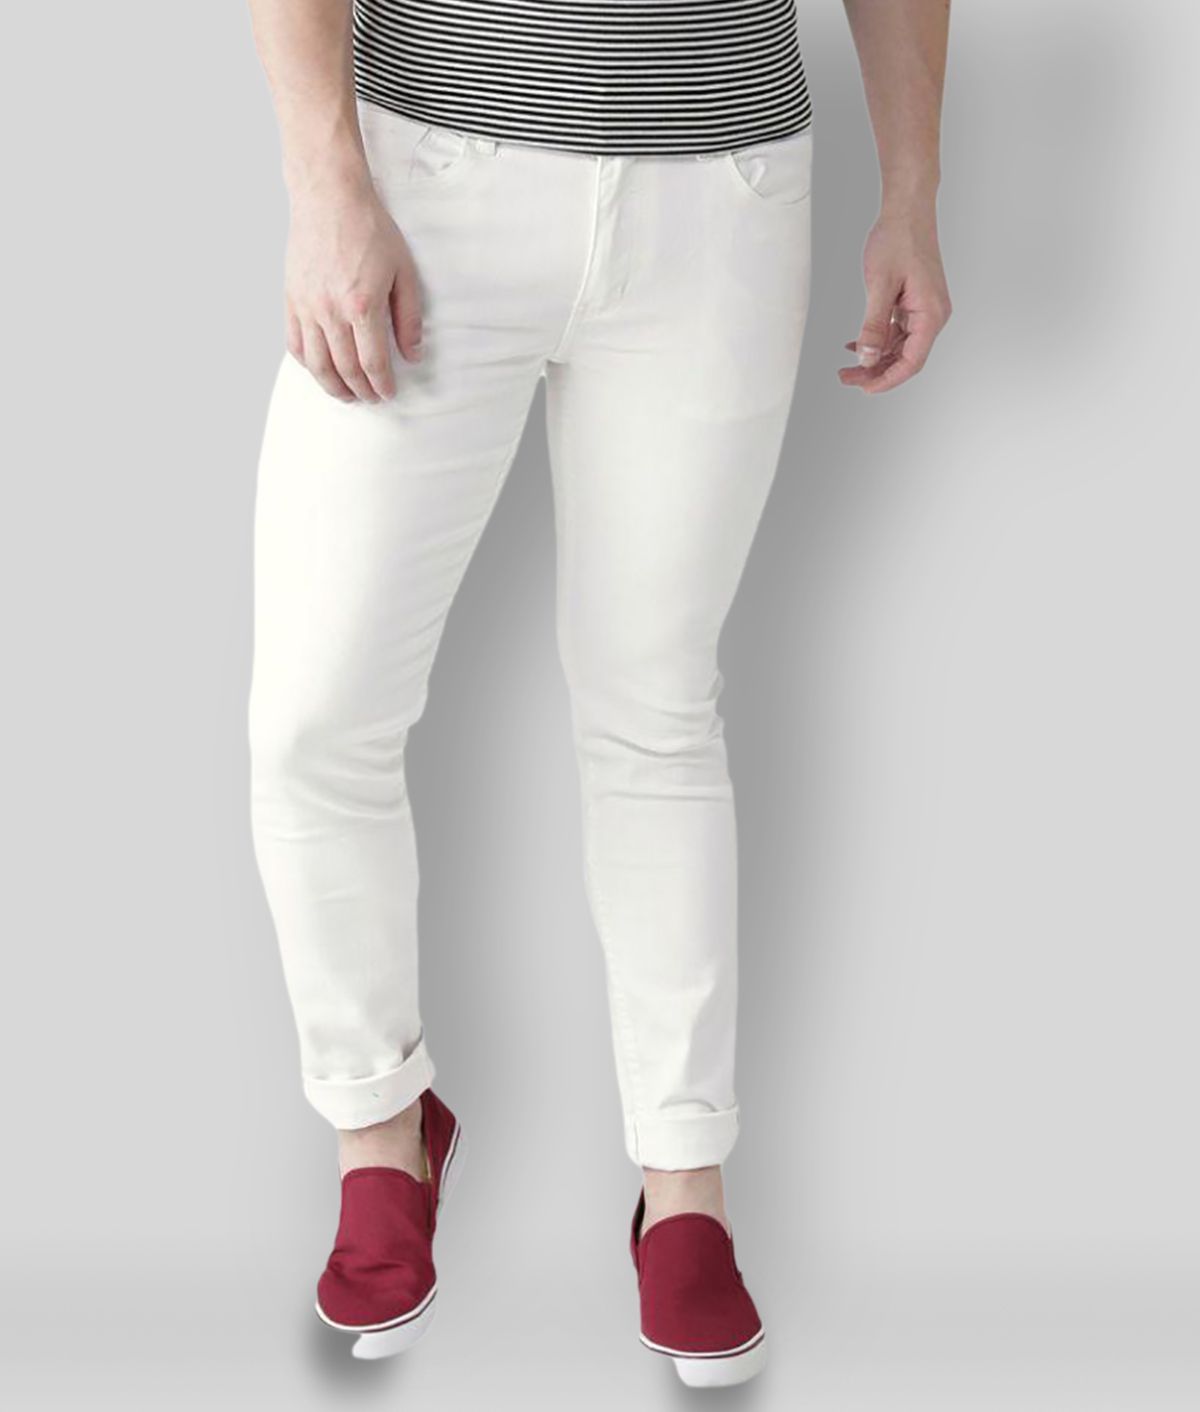     			Lawson - White Cotton Blend Slim Men's Jeans ( Pack of 1 )